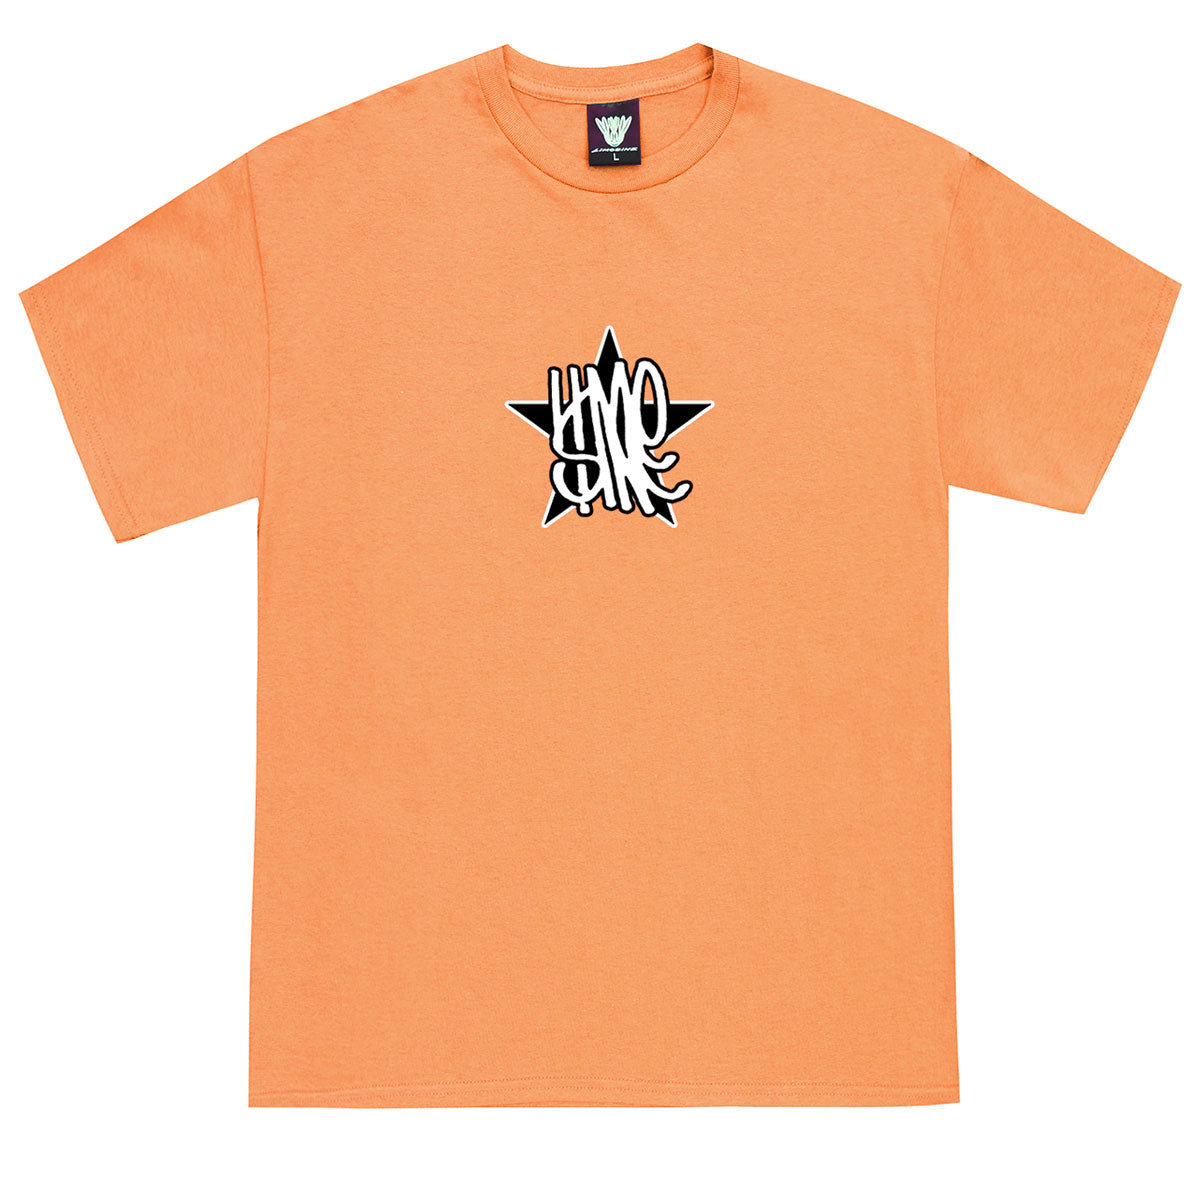 Limosine Star T-Shirt - Orange Coral image 1